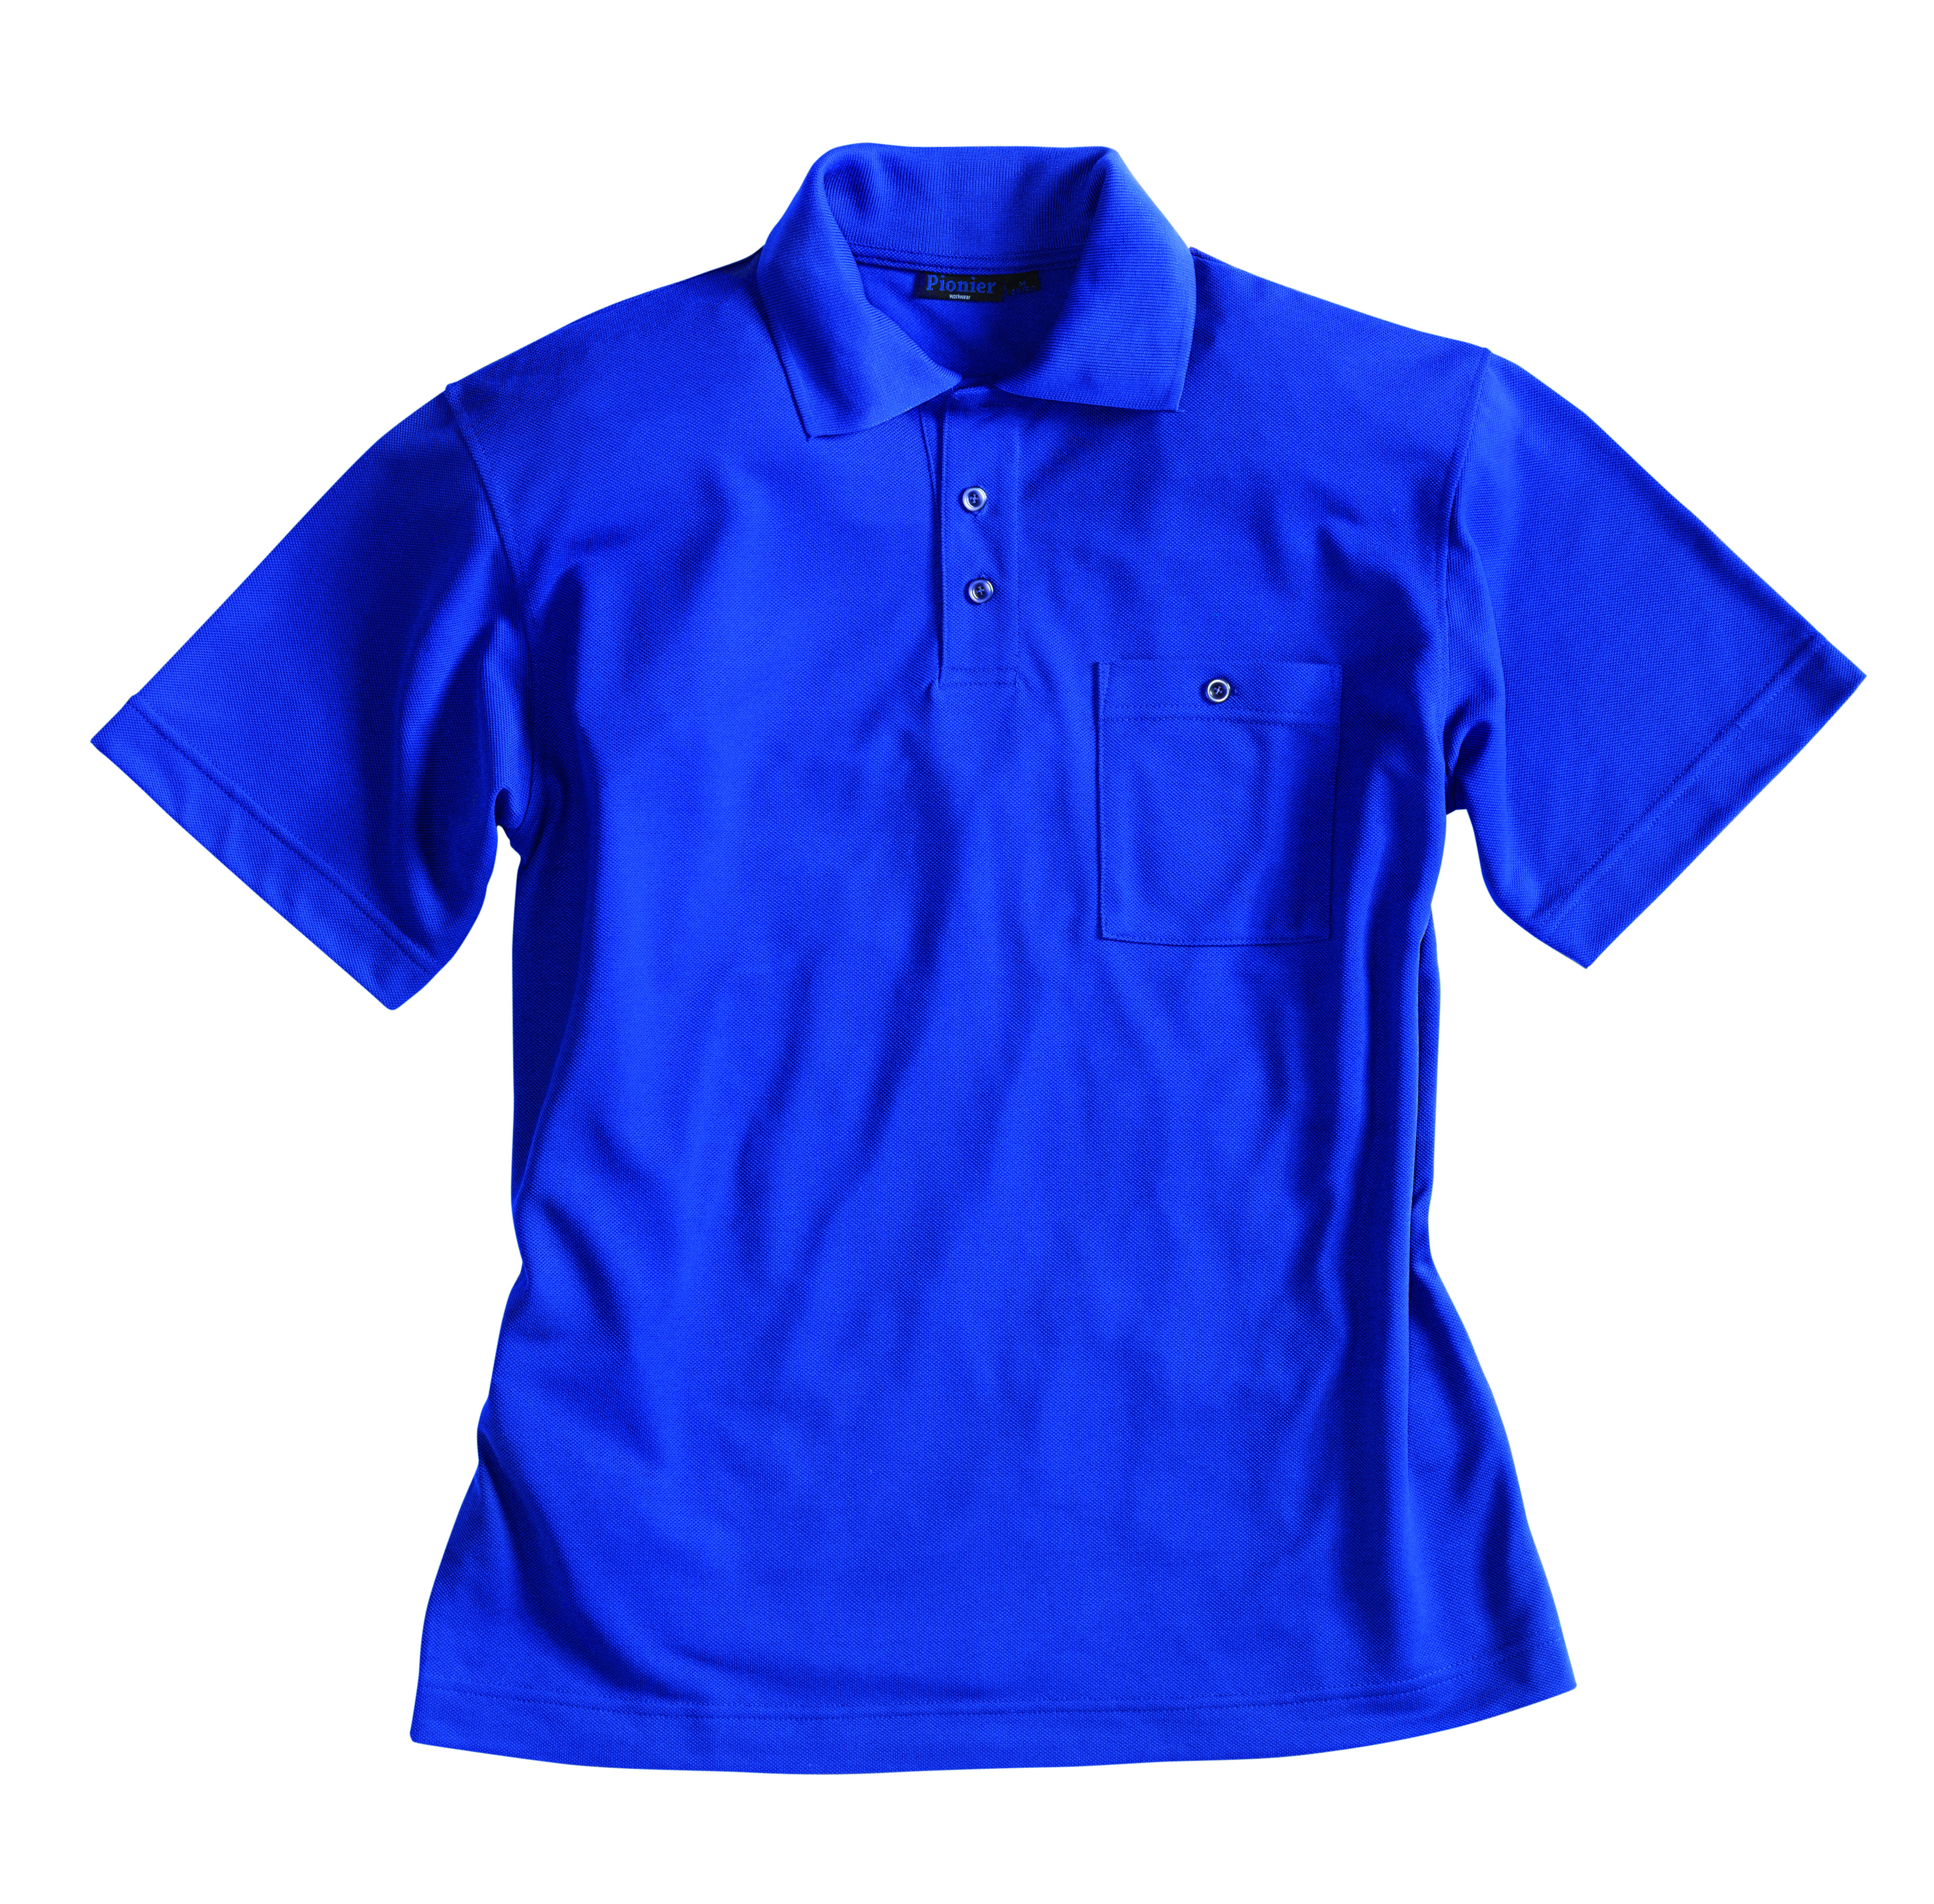 PIONIER Funktions Poloshirt Arbeitsshirt Berufsshirt Arbeitskleidung kornblau